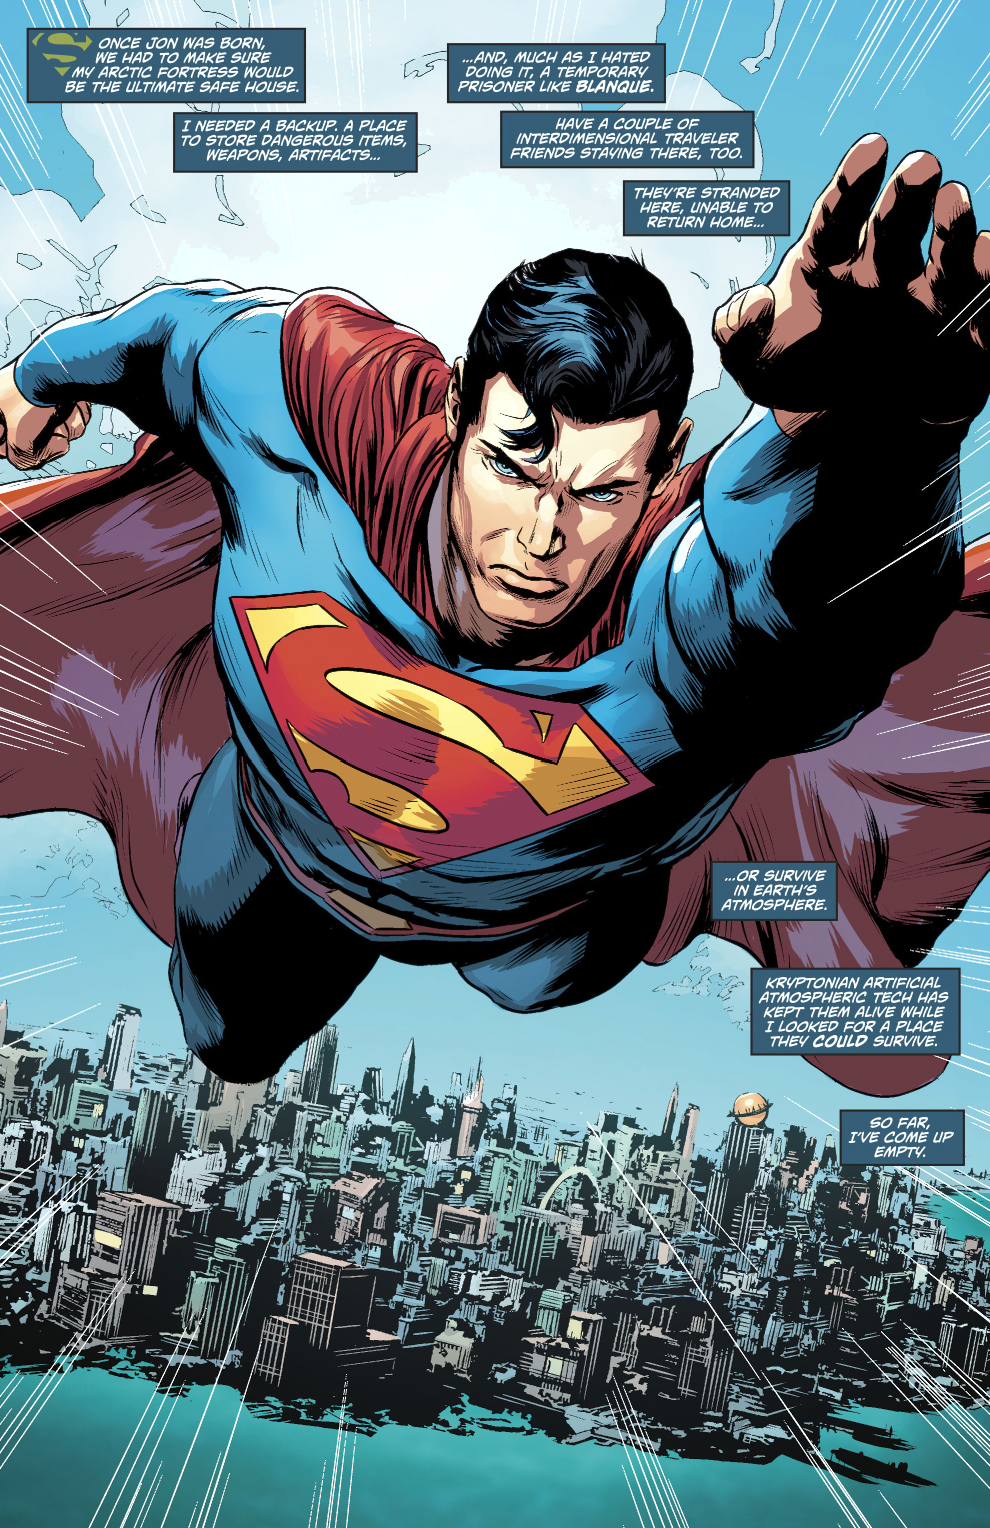 Superman (Action Comics 979)